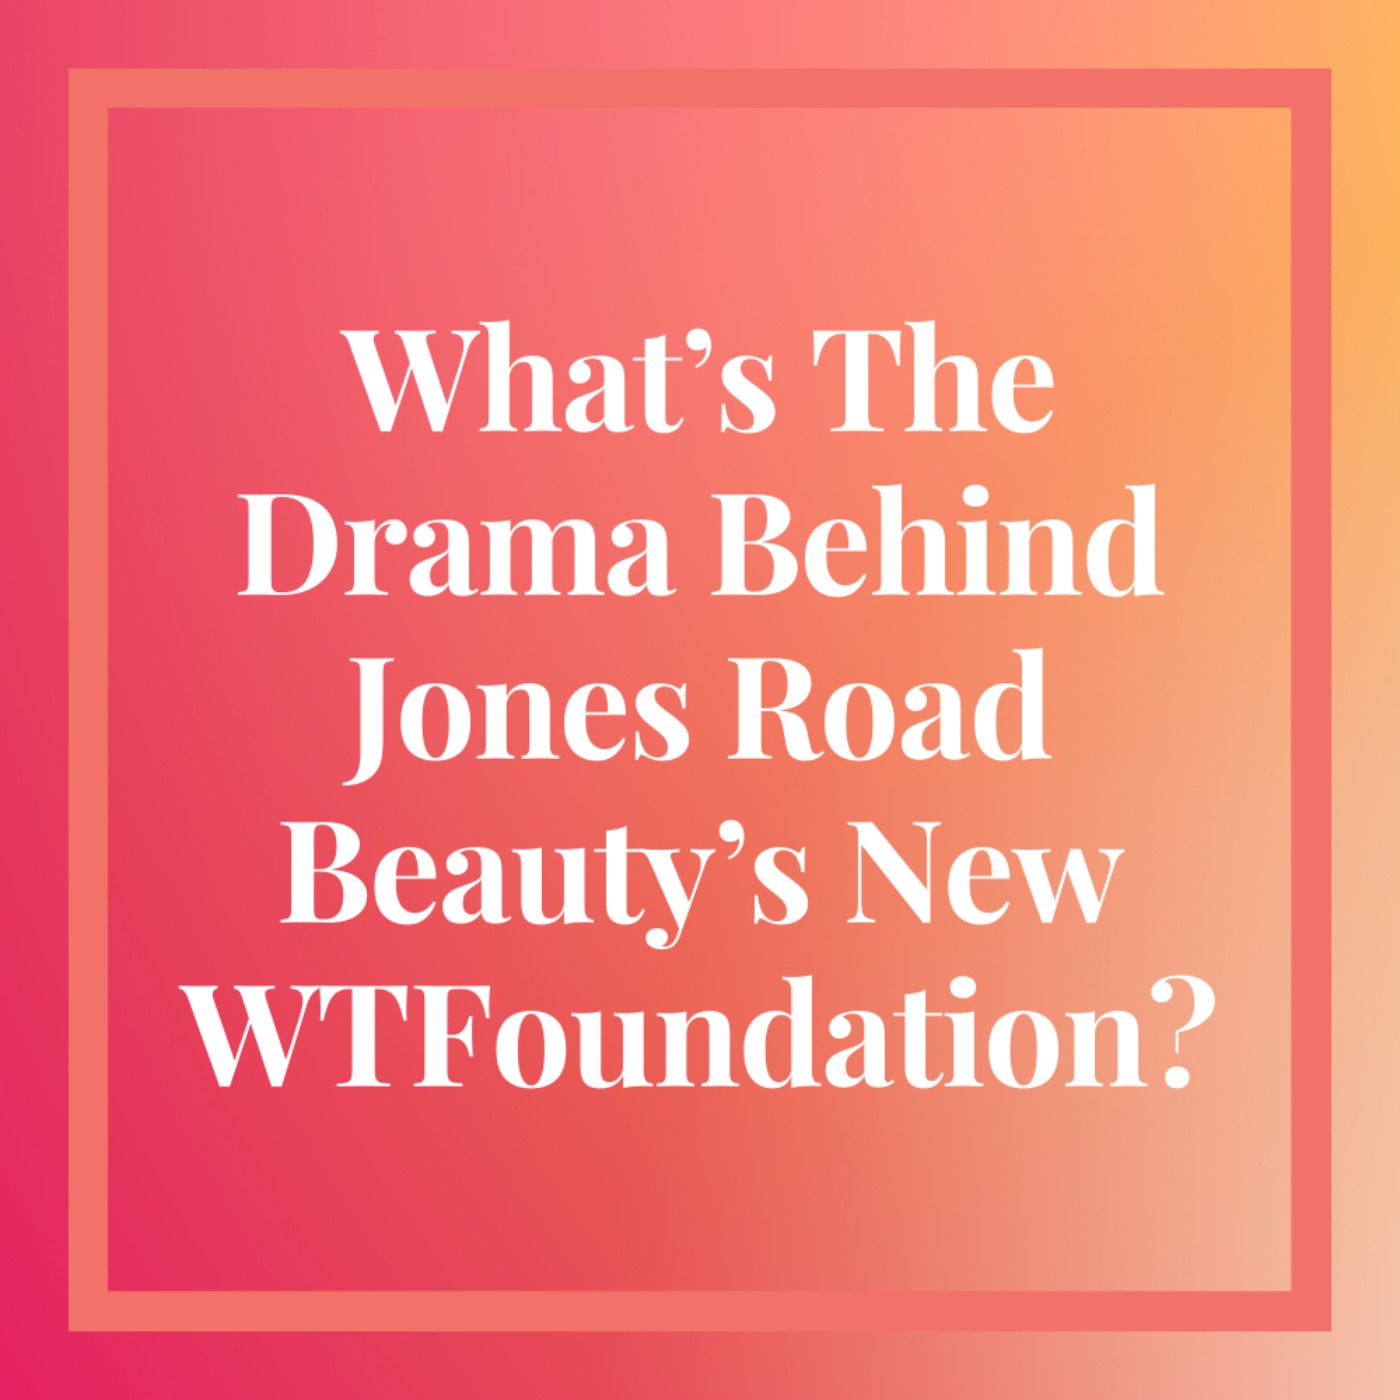 The TikTok Drama With Jones Road's WTFoundation